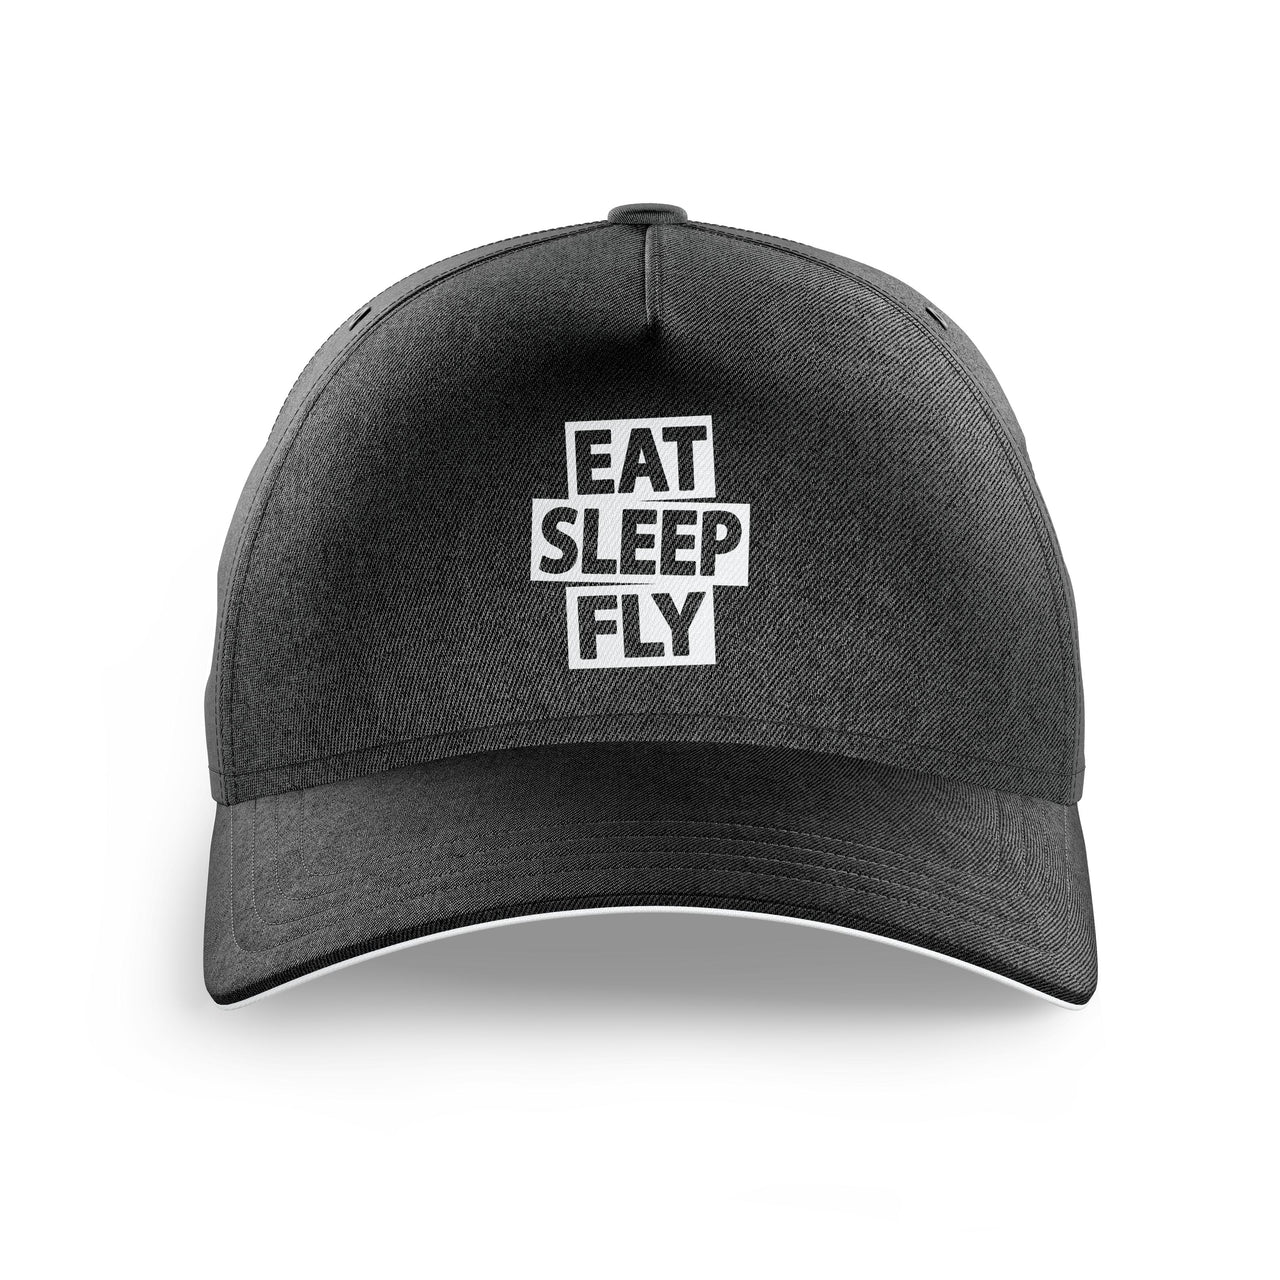 Eat Sleep Fly Printed Hats